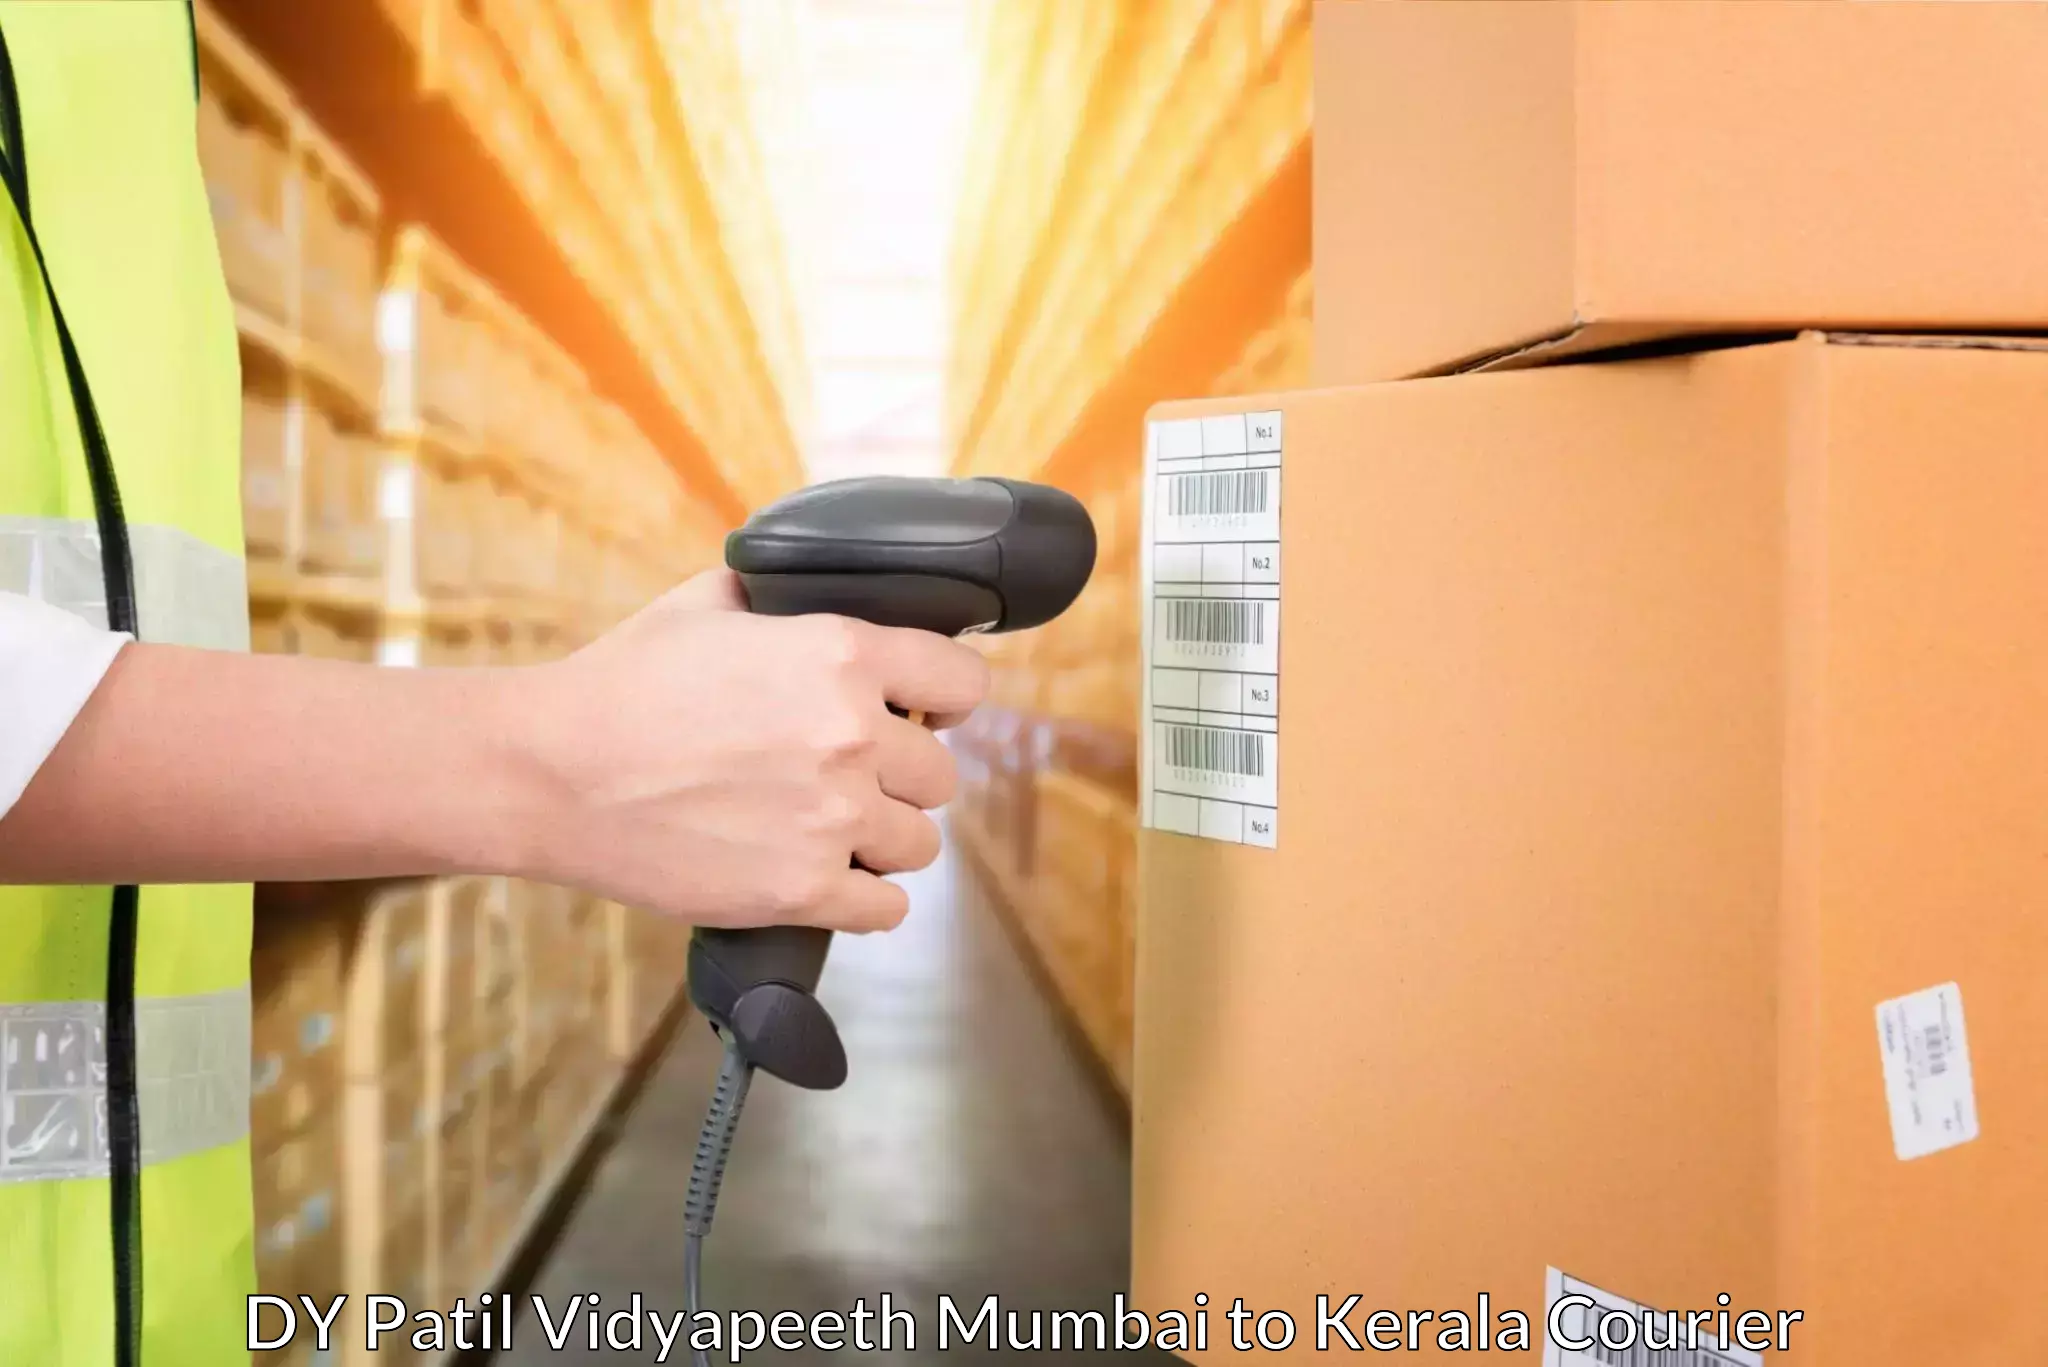 Easy return solutions DY Patil Vidyapeeth Mumbai to Kerala